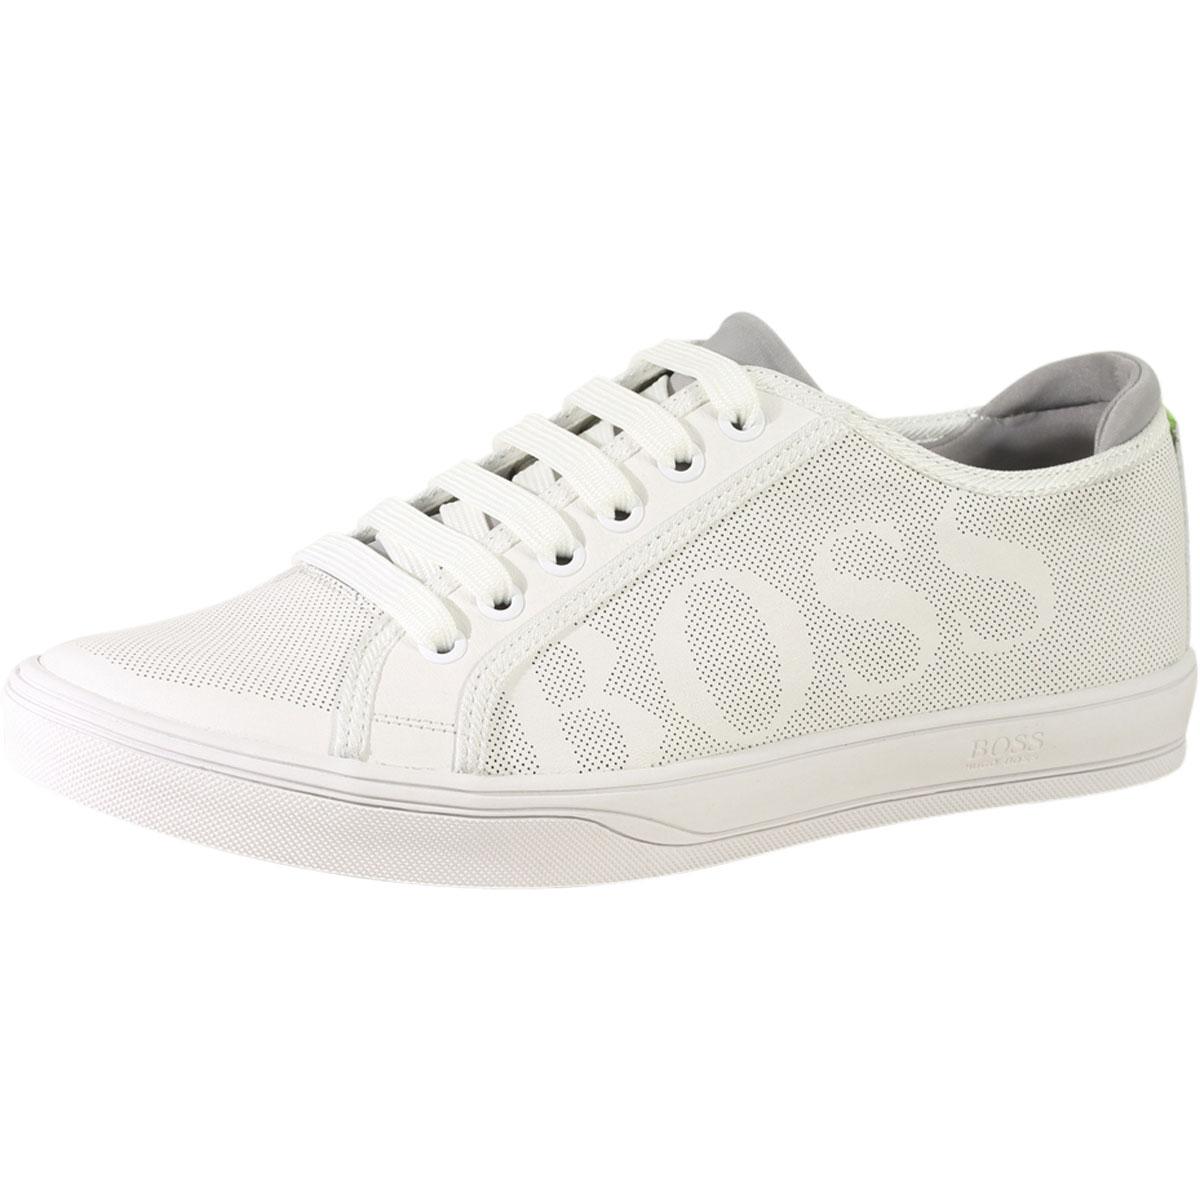 Hugo Boss Men's Attitude Trainers Sneakers Shoes - White - 10 D(M) US